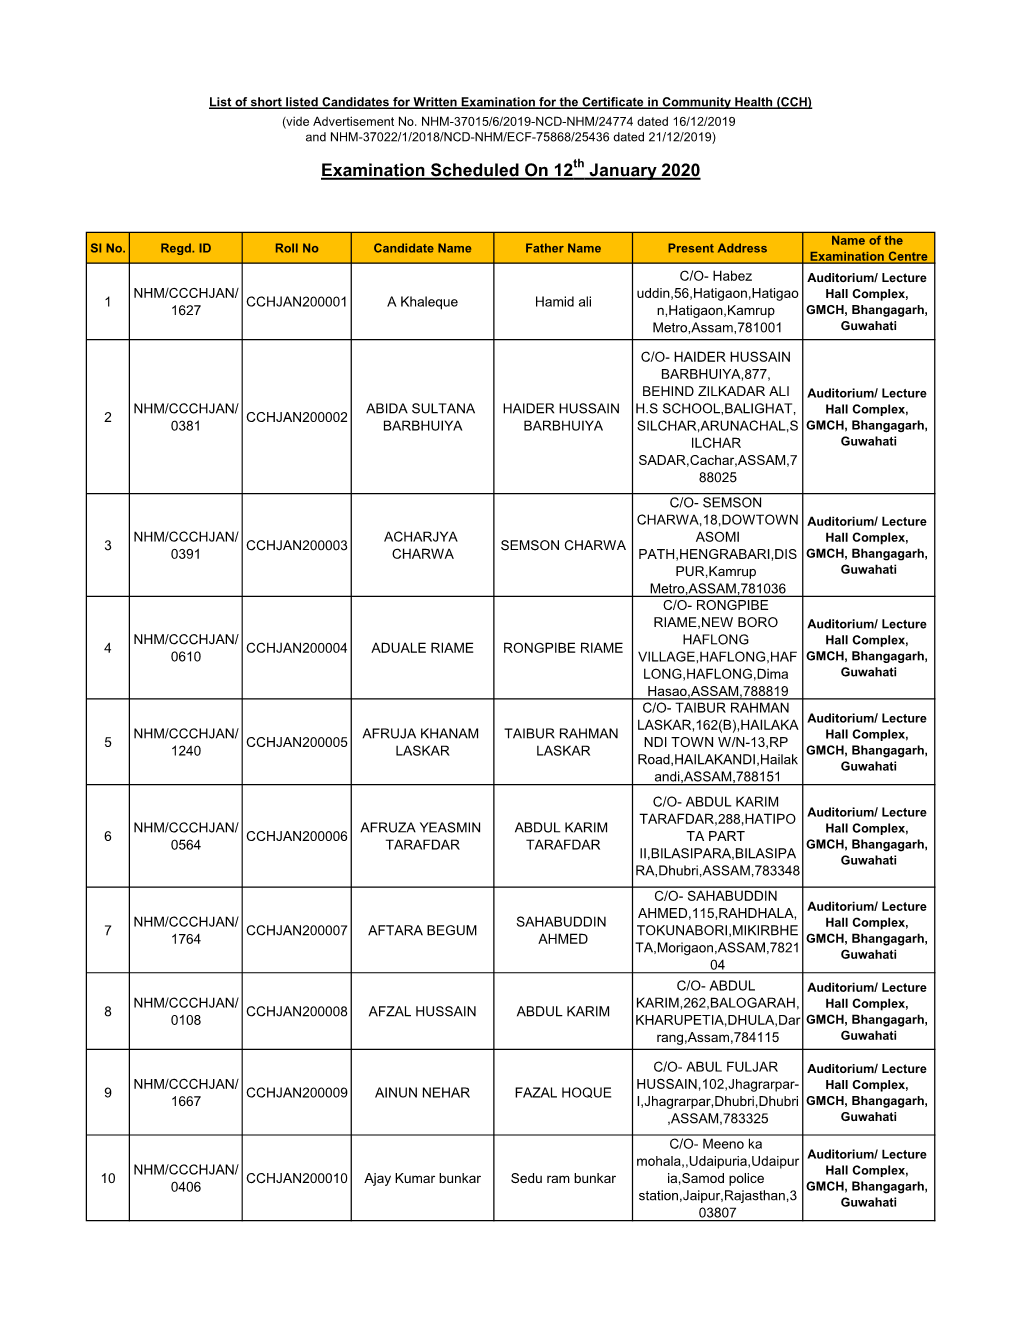 Examination Scheduled on 12 January 2020